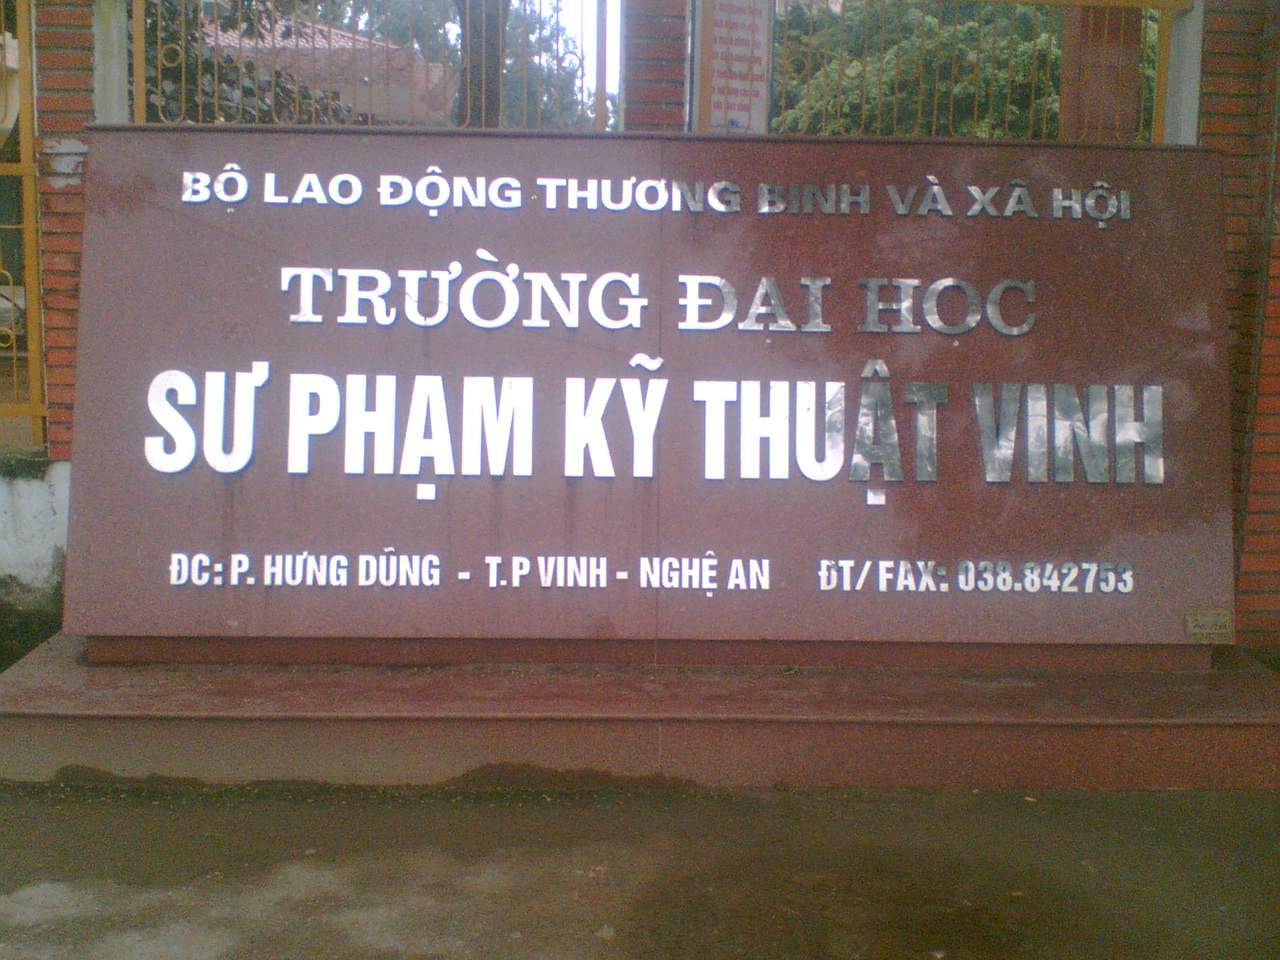 Ty le choi truong Dai Hoc Su Pham Ky Thuat Vinh nam 2014